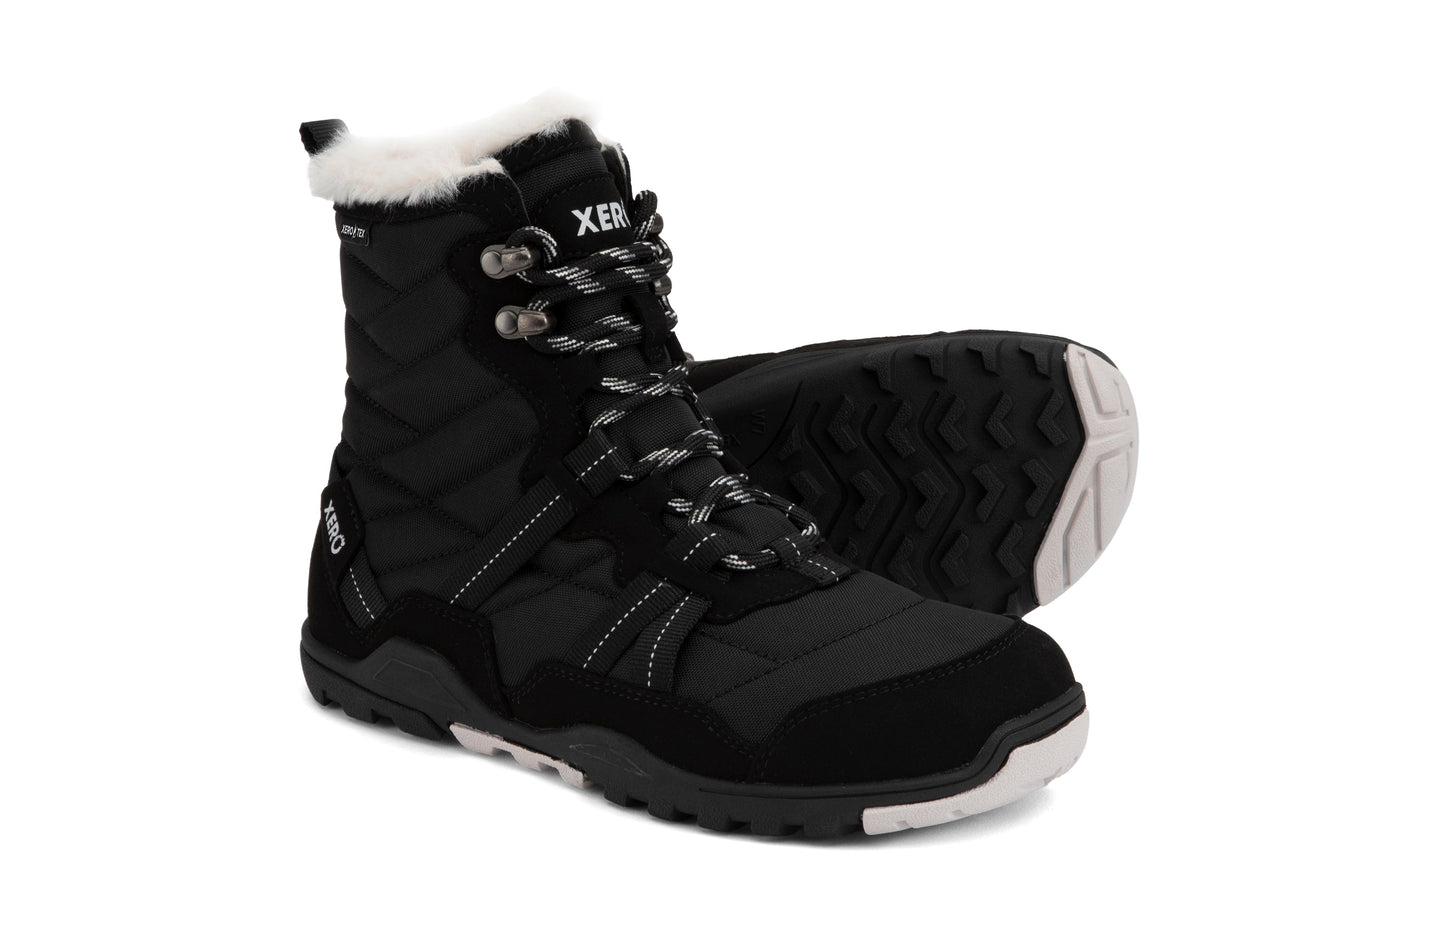 Xero Shoes Alpine Womens barfods vinterstøvler til kvinder i farven black, par